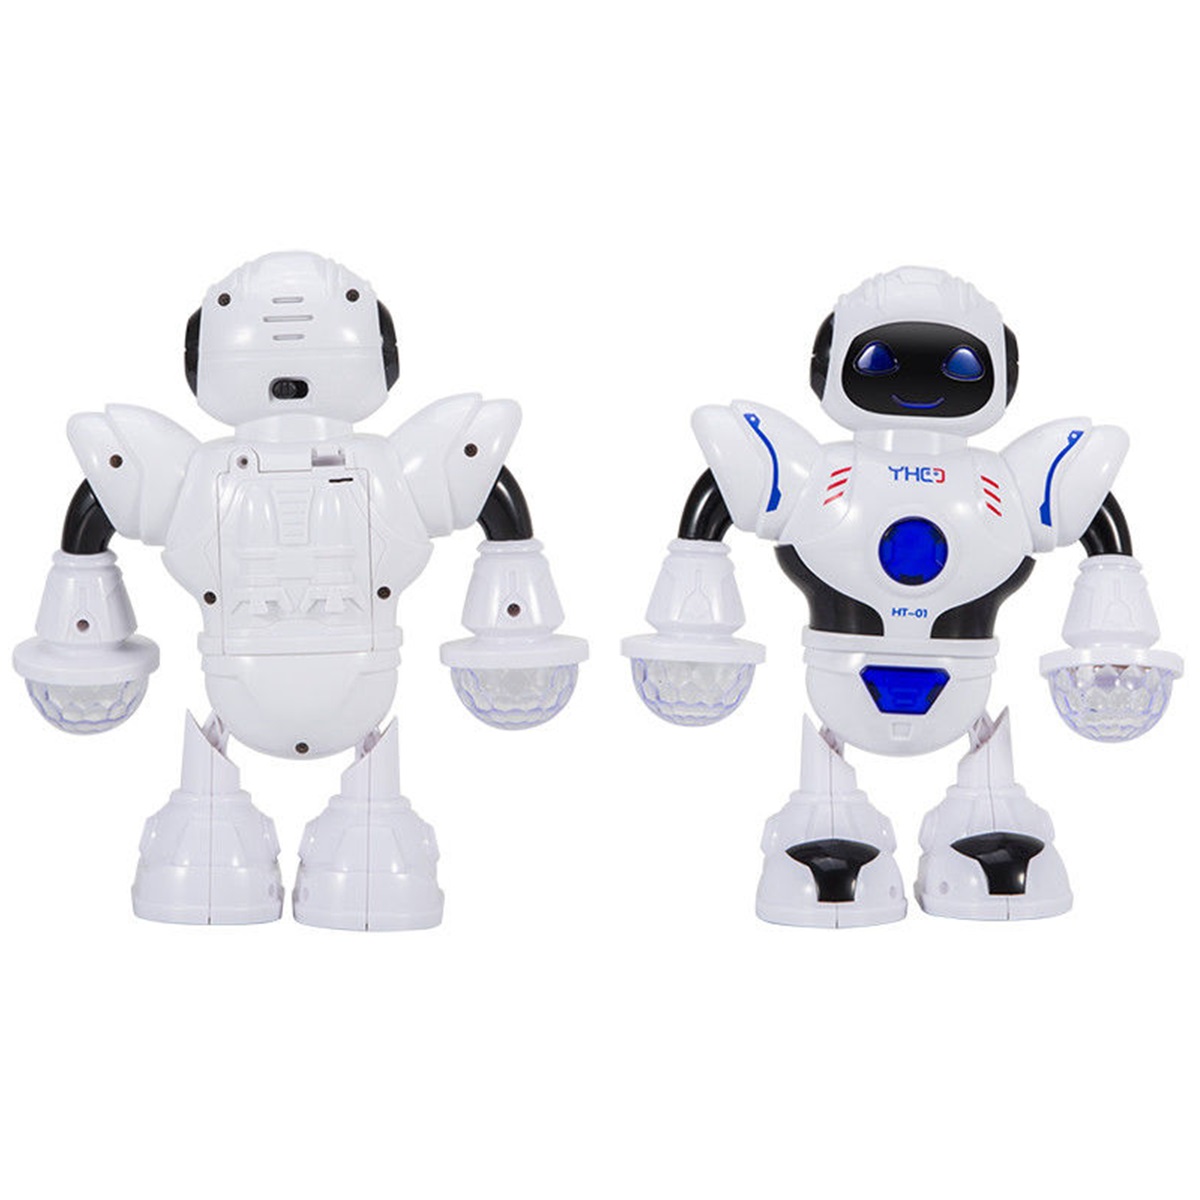 Electronic-Robot-Sing-Dancing-Walking-Gesture-Fun-Lights-Sound-Toys-For-Kids-Toy-1605614